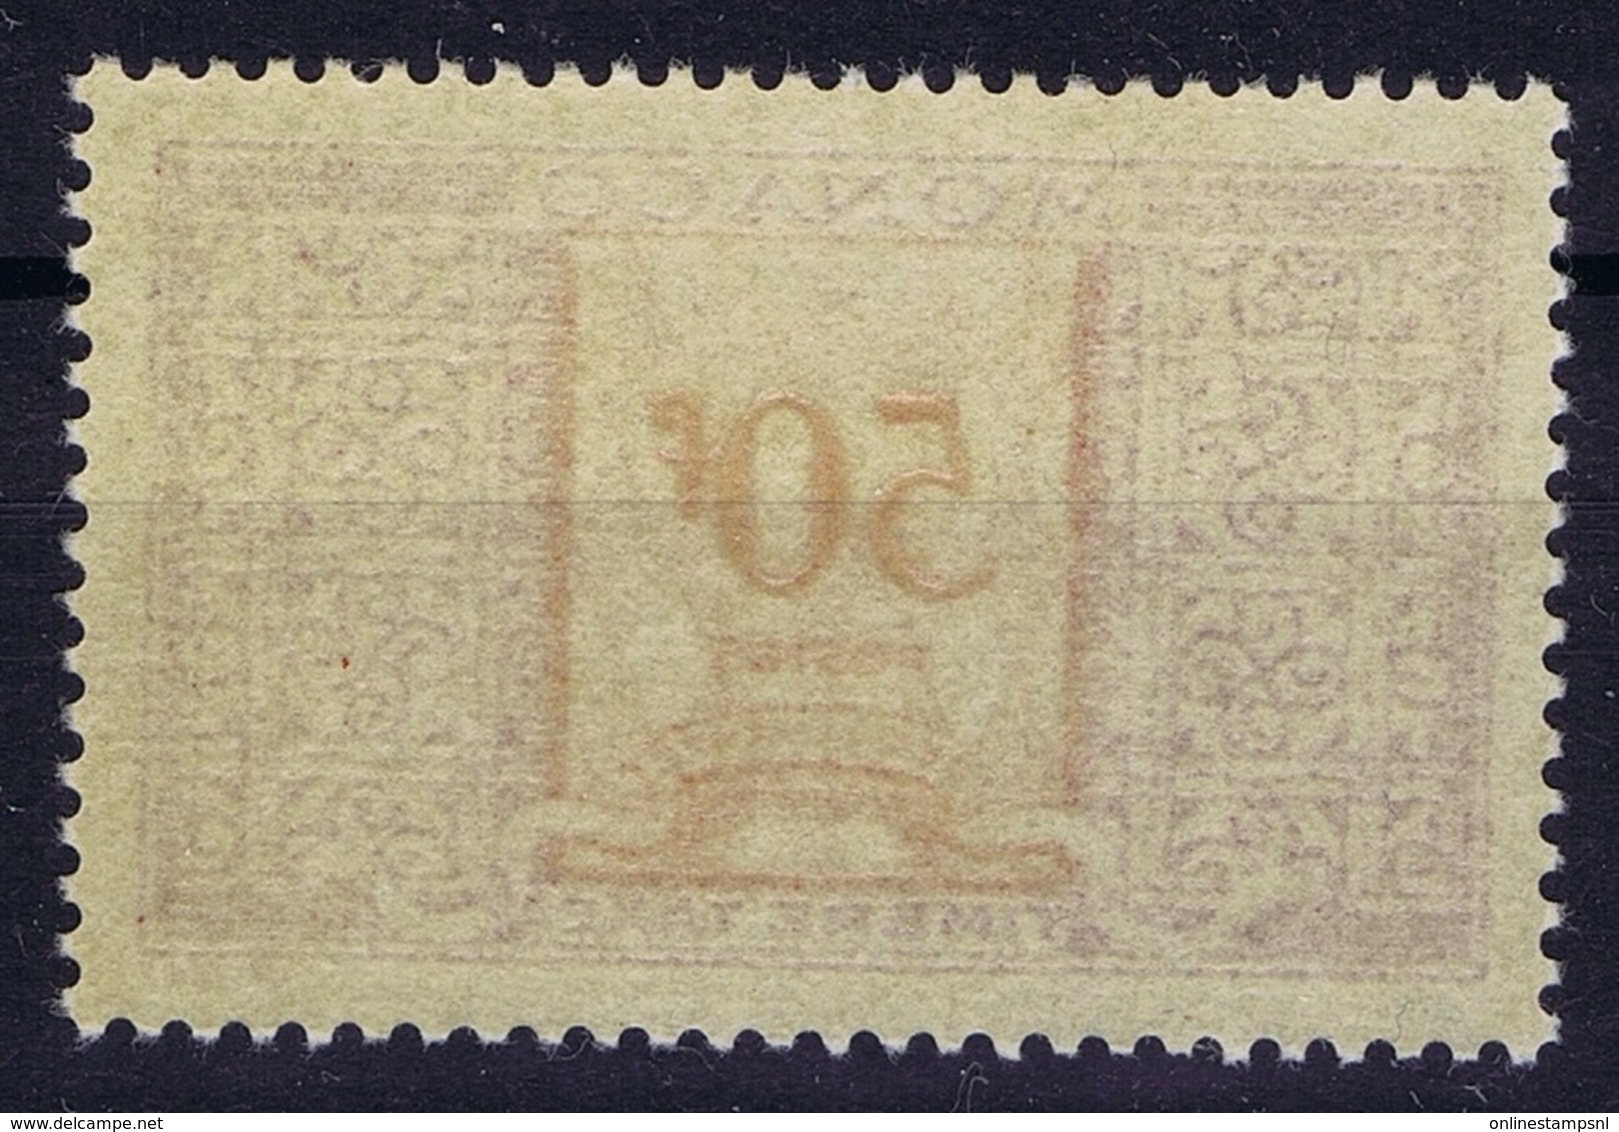 Monaco Mi 39 Timbre Tax   Postfrisch/neuf Sans Charniere /MNH/** 1950 - Postage Due